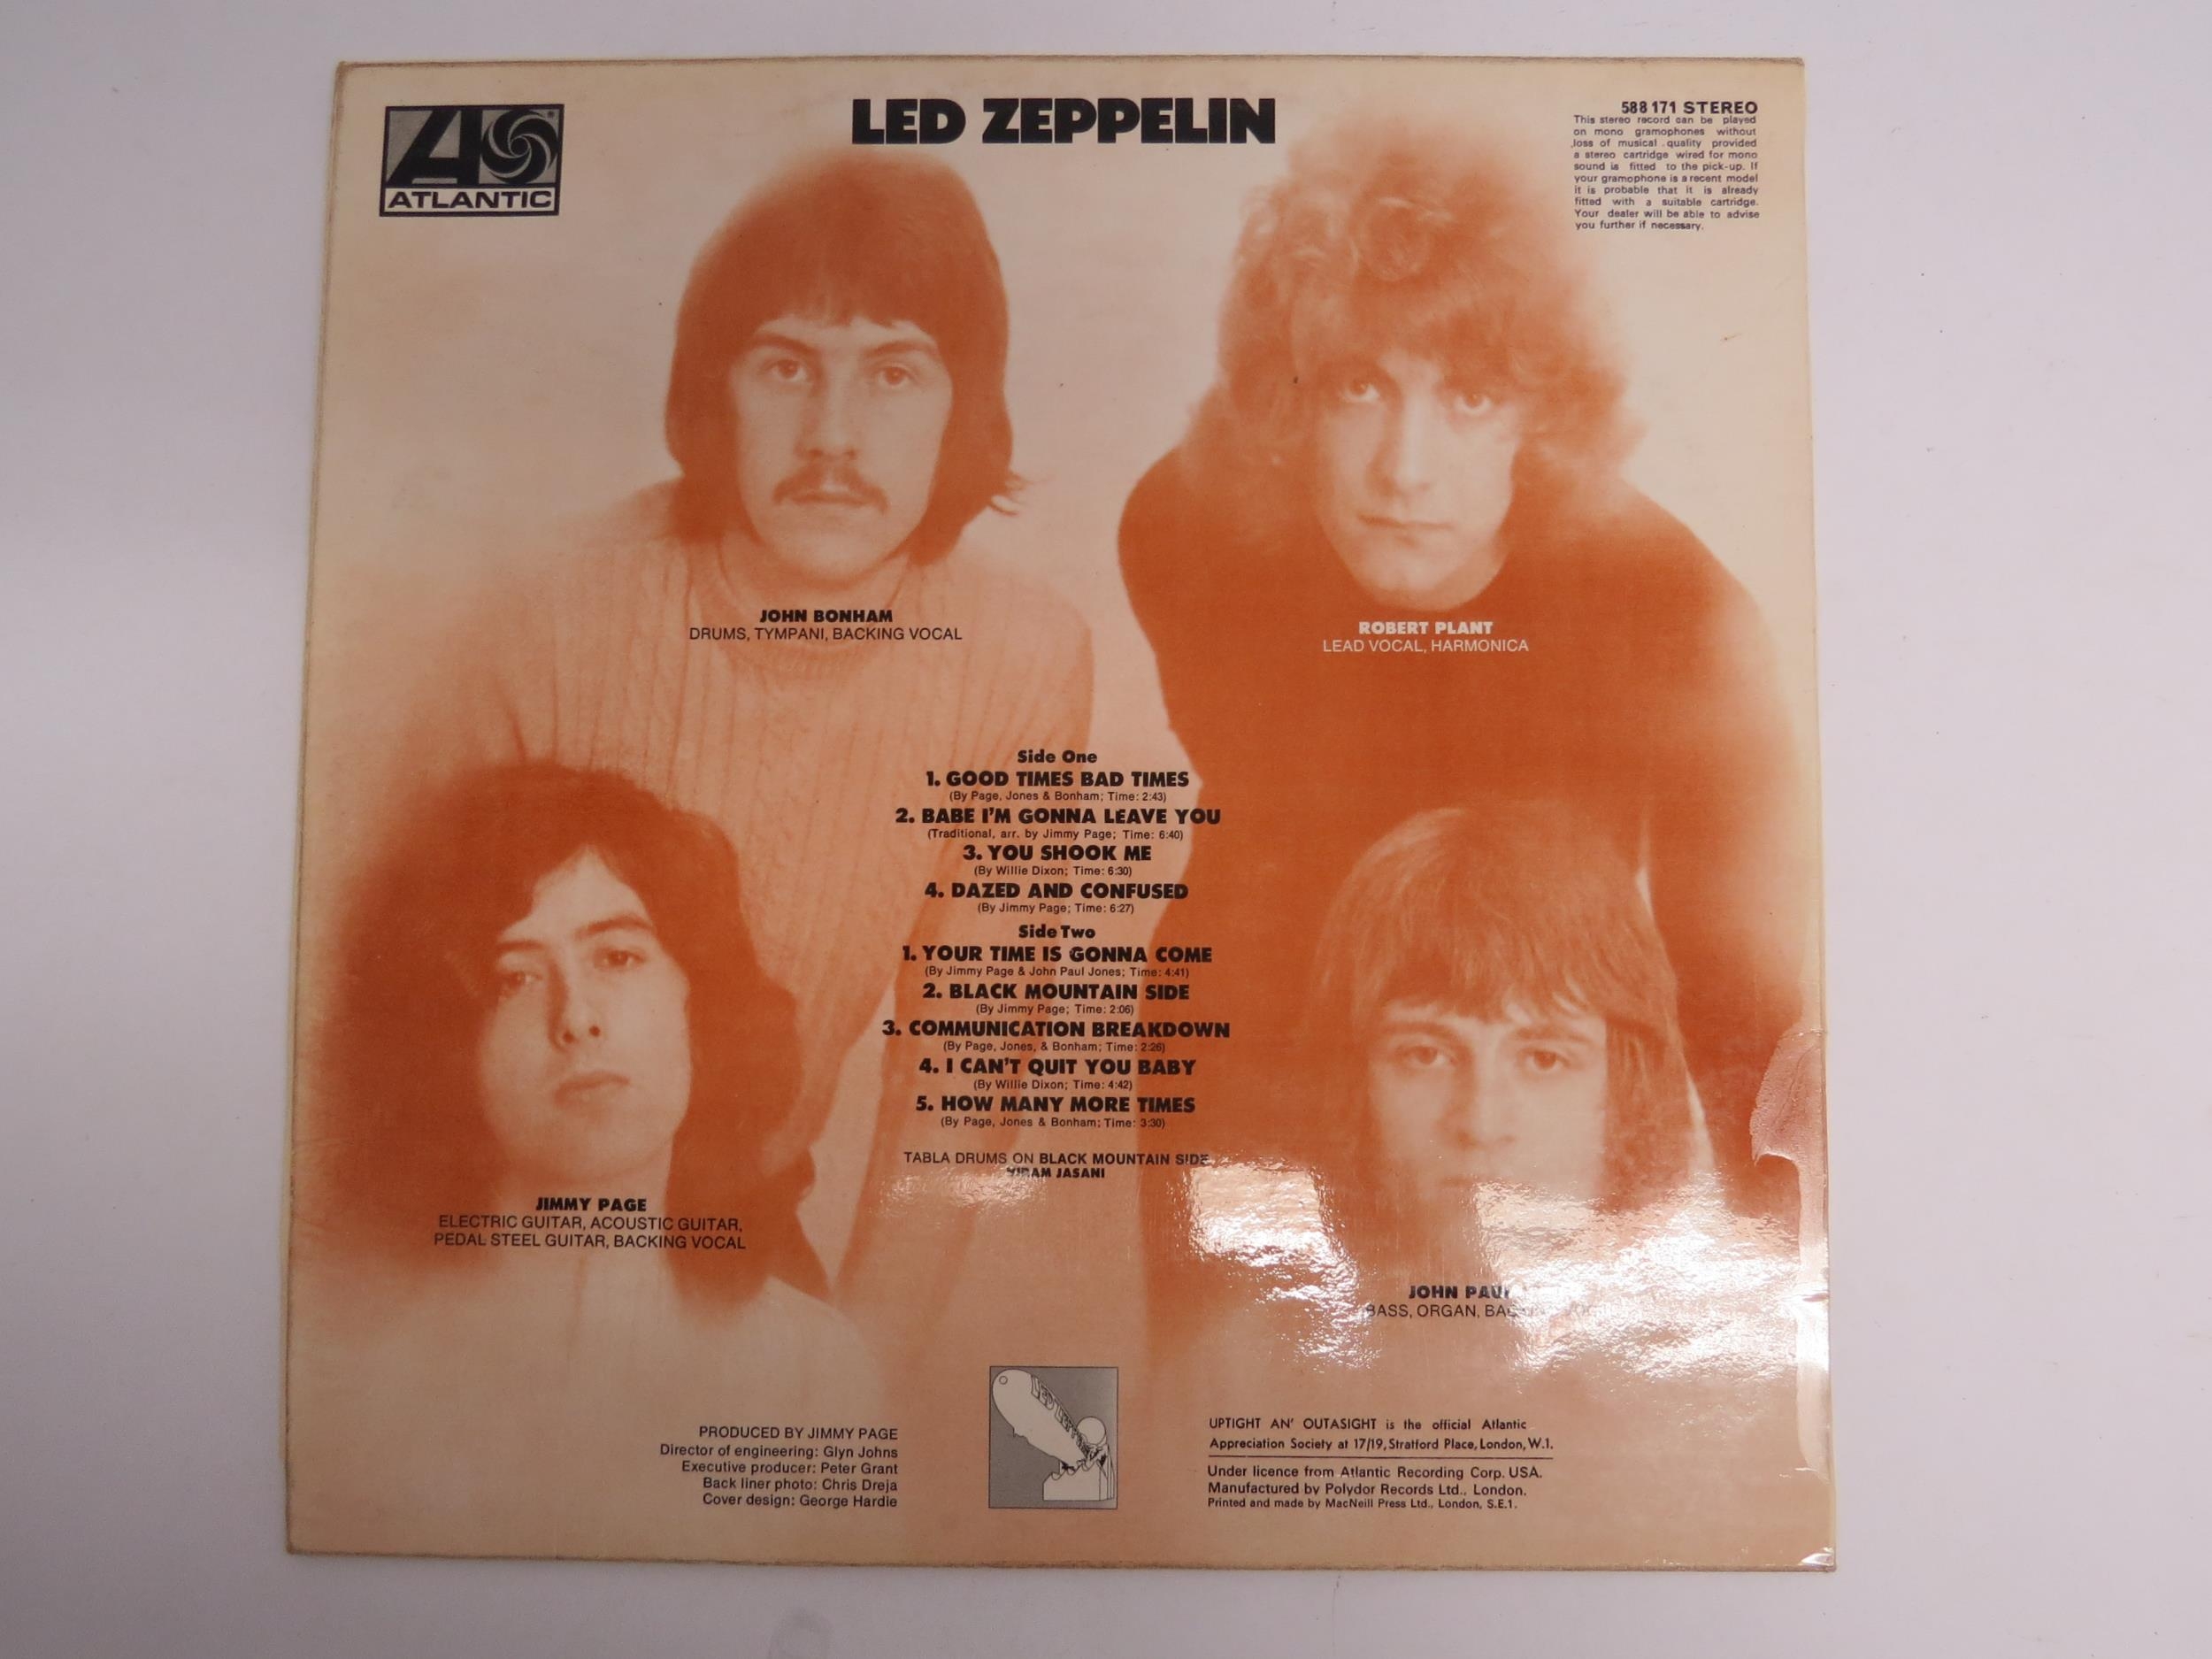 LED ZEPPELIN: 'Led Zeppelin' LP, 1969 UK pressing, plum Atlantic labels with "Warner Bros. / 7 - Image 2 of 4